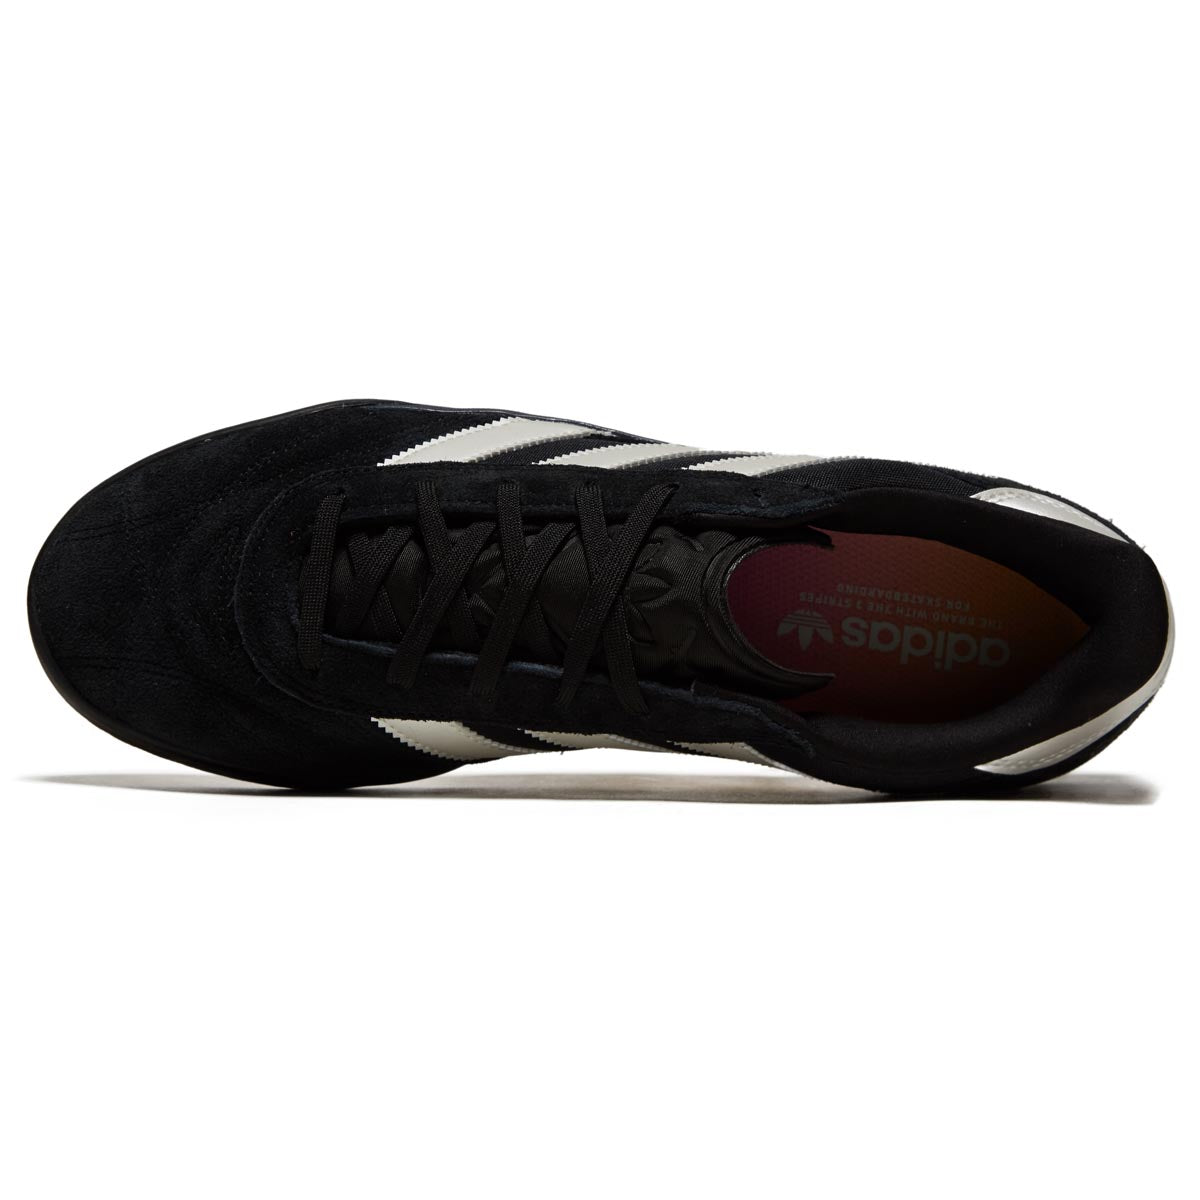 Adidas Copa Premiere Shoes - Black/Metallic/Spark image 3